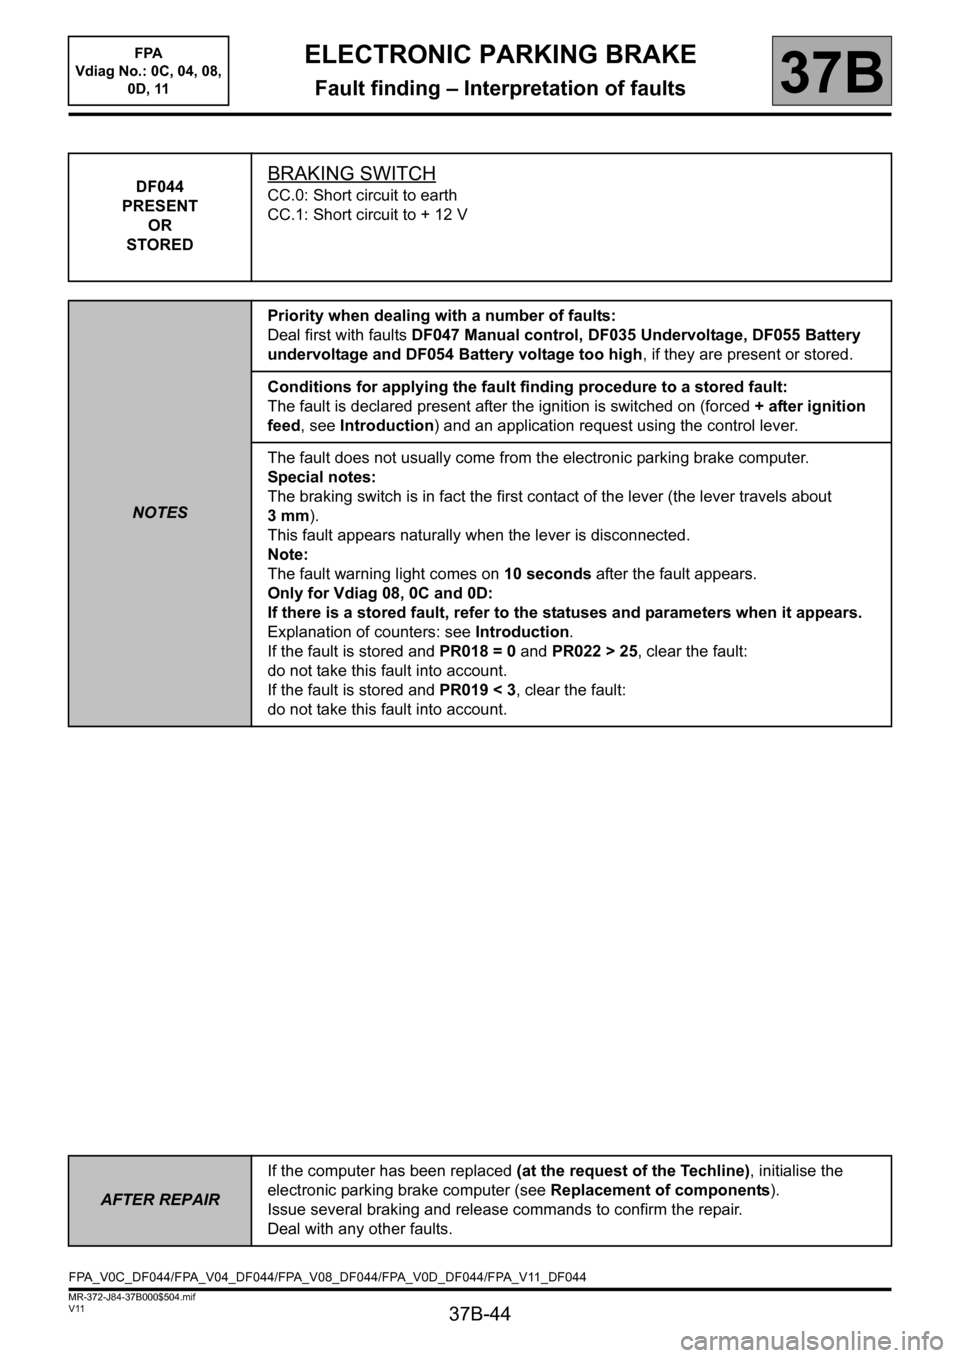 RENAULT SCENIC 2013 J95 / 3.G Electronic Parking Brake Owners Manual 37B-44
MR-372-J84-37B000$504.mif
V11
ELECTRONIC PARKING BRAKE
Fault finding – Interpretation of faults
FPA  
Vdiag No.: 0C, 04, 08, 
0D, 11
37B
DF044
PRESENT
OR
STOREDBRAKING SWITCH
CC.0: Short circ